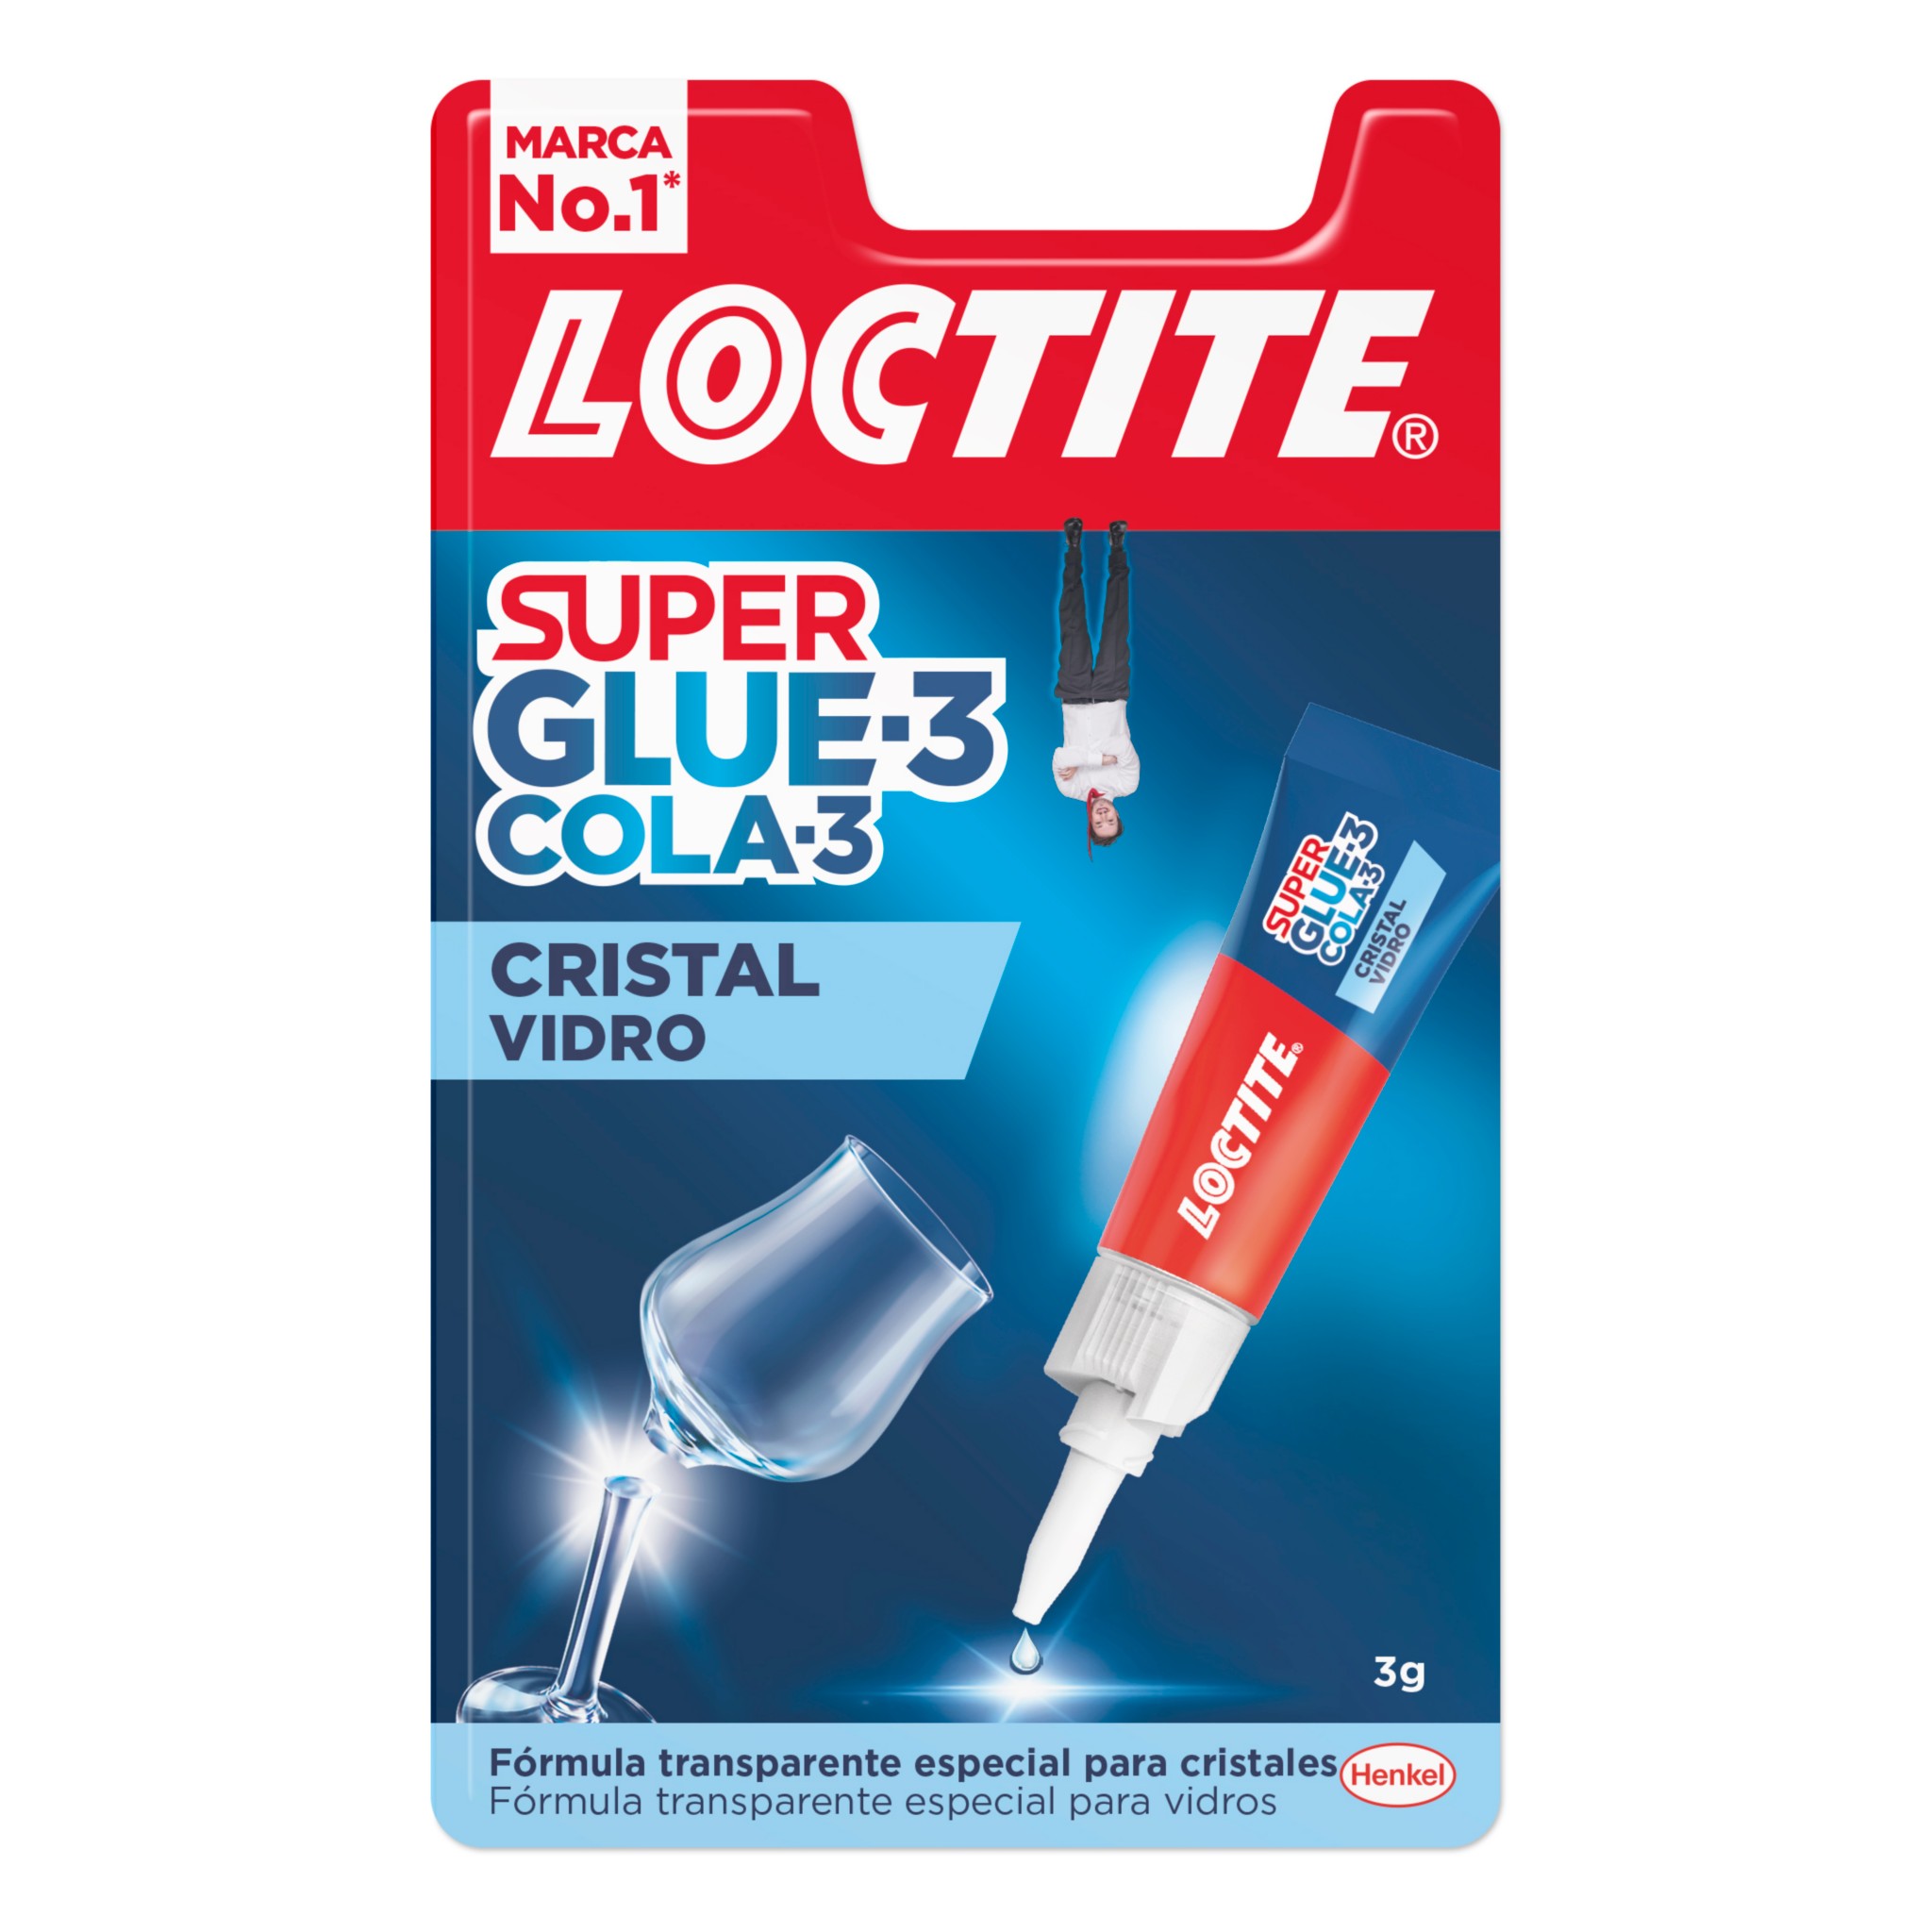 Glue-3 Cristal